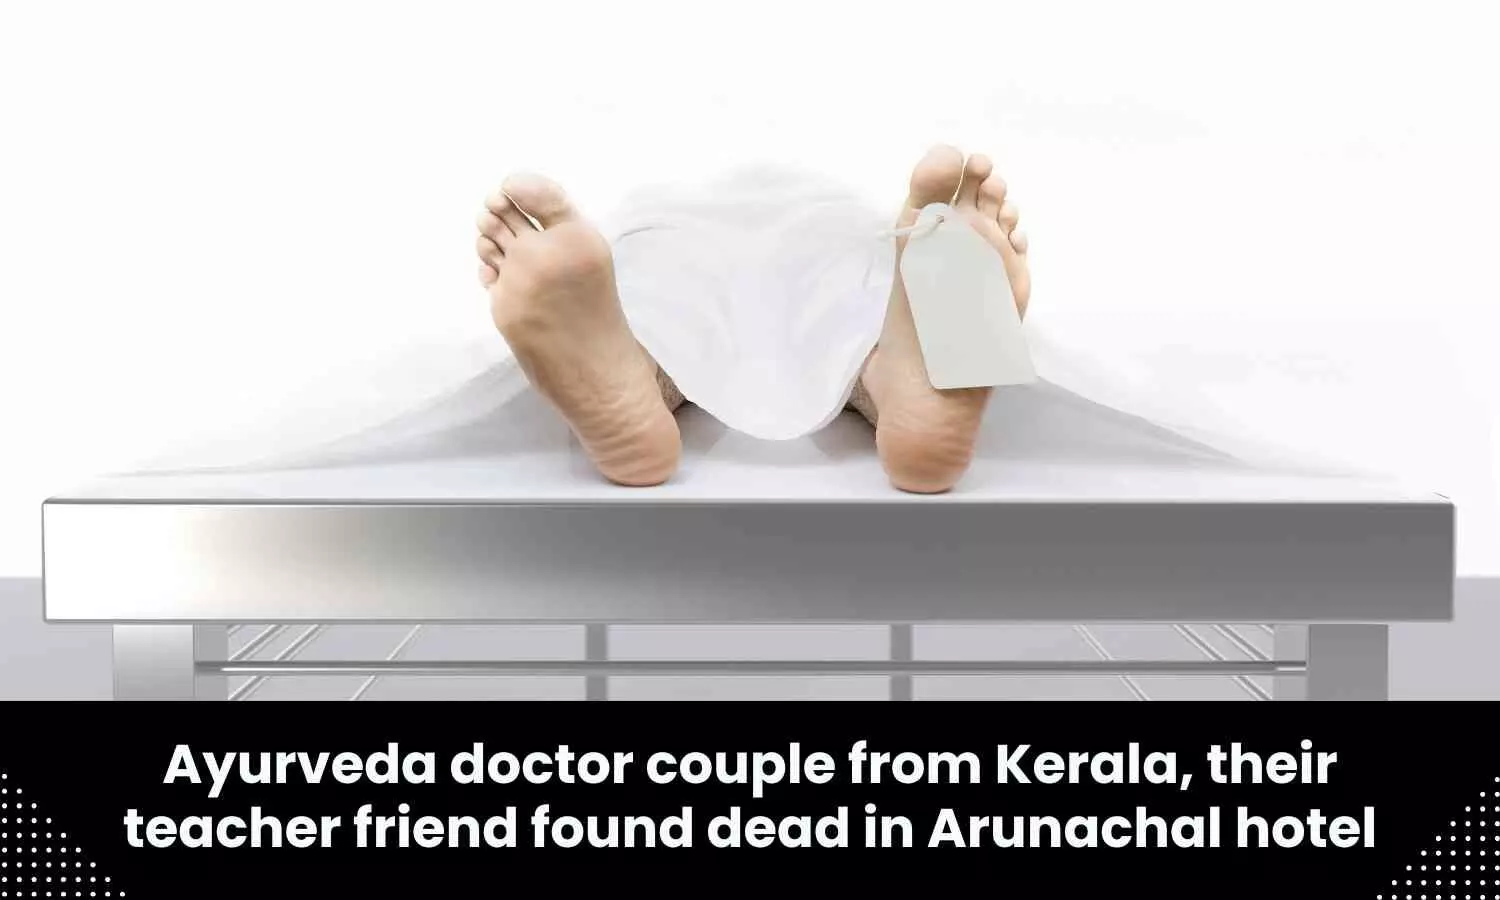 Ayurveda doctor couple, teacher found dead in hotel